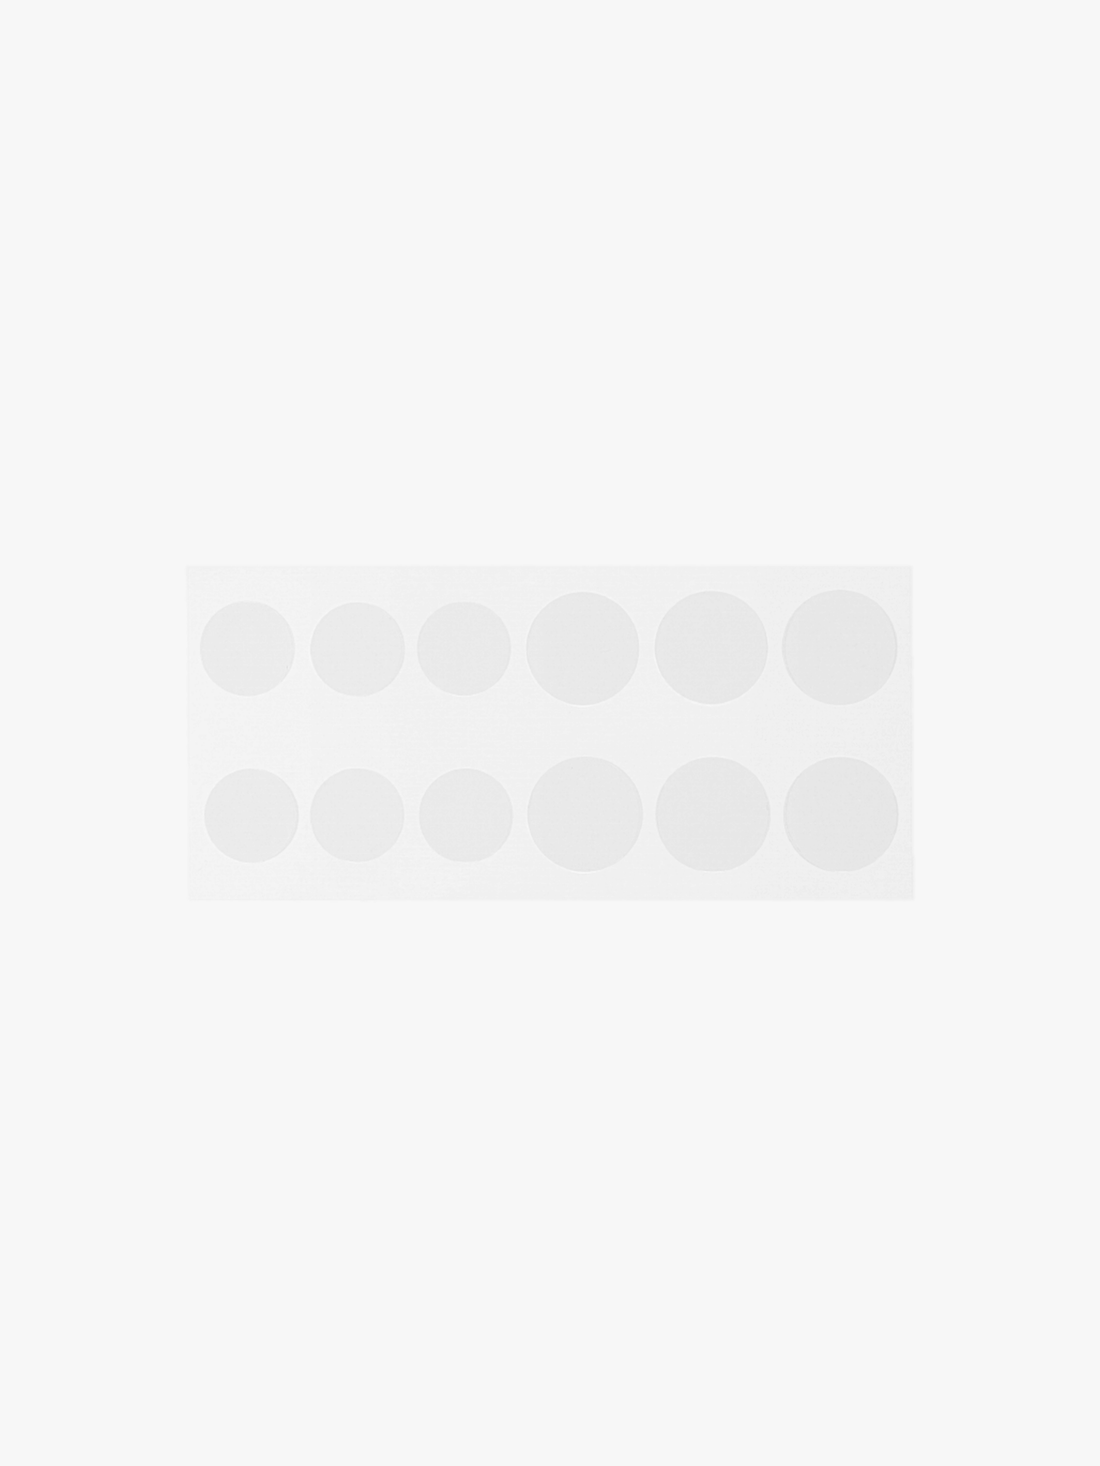 Holika Holika - Button patches - AC MILD Red Spot Patch